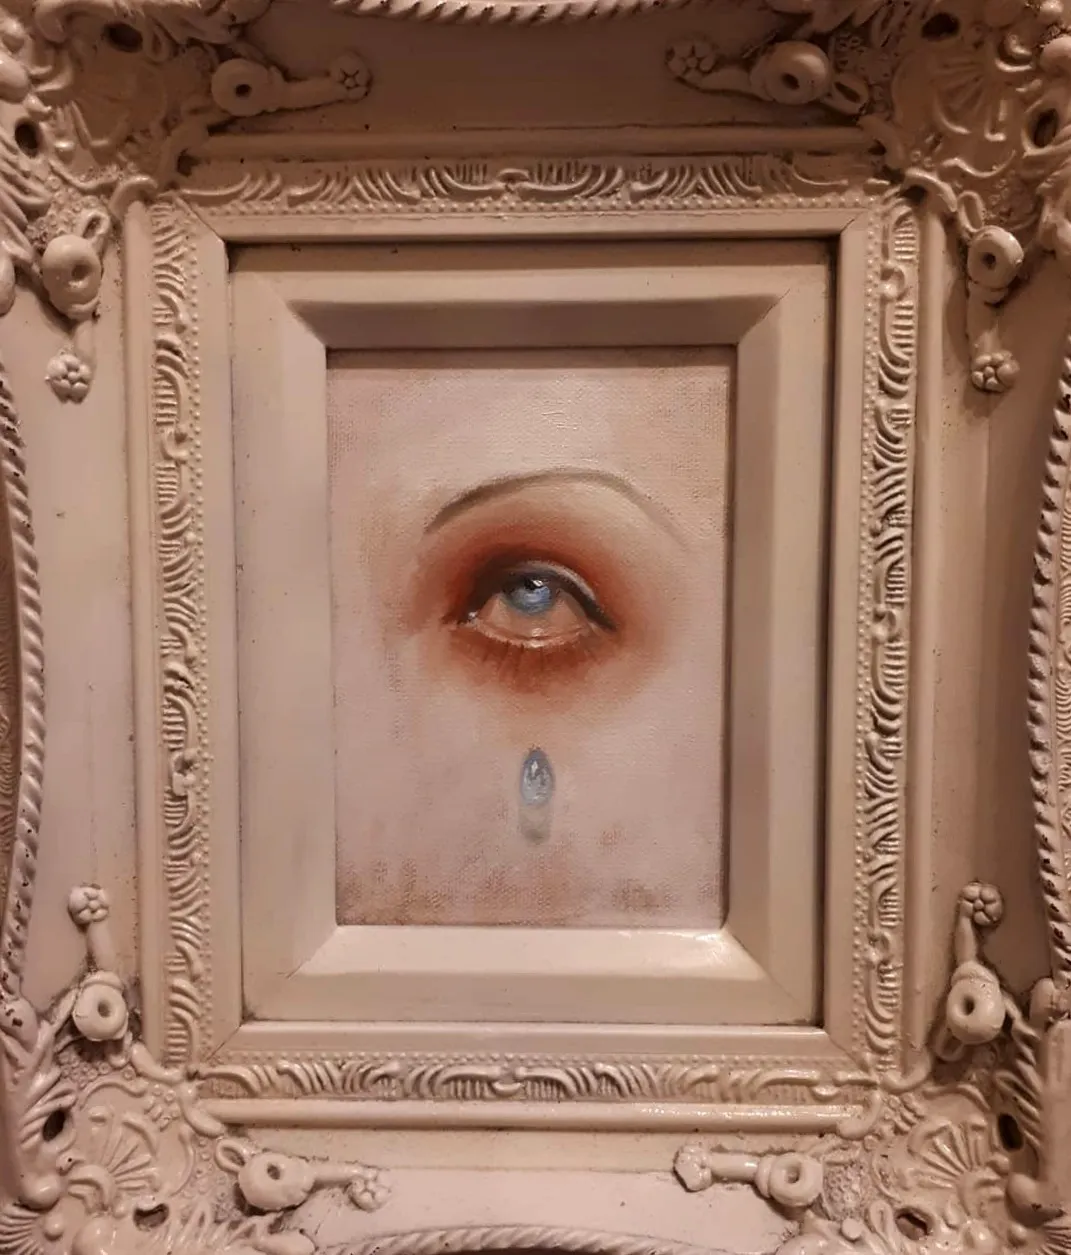 Painting of contemporary artist Vartan Ghazarian - Tear. For sale.